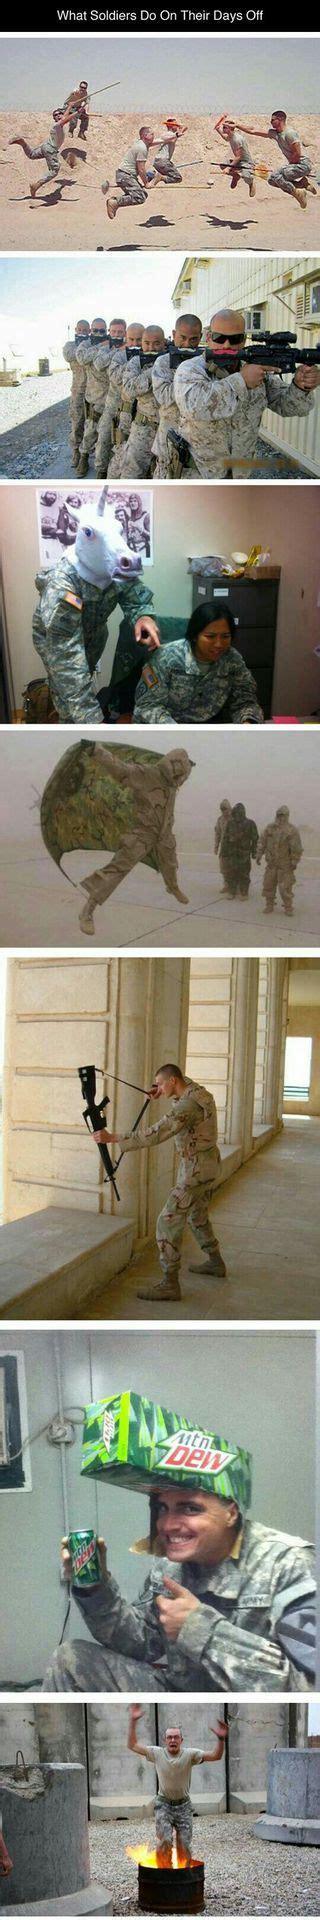 Military Jokes Army Humor Army Memes Really Funny Memes Stupid